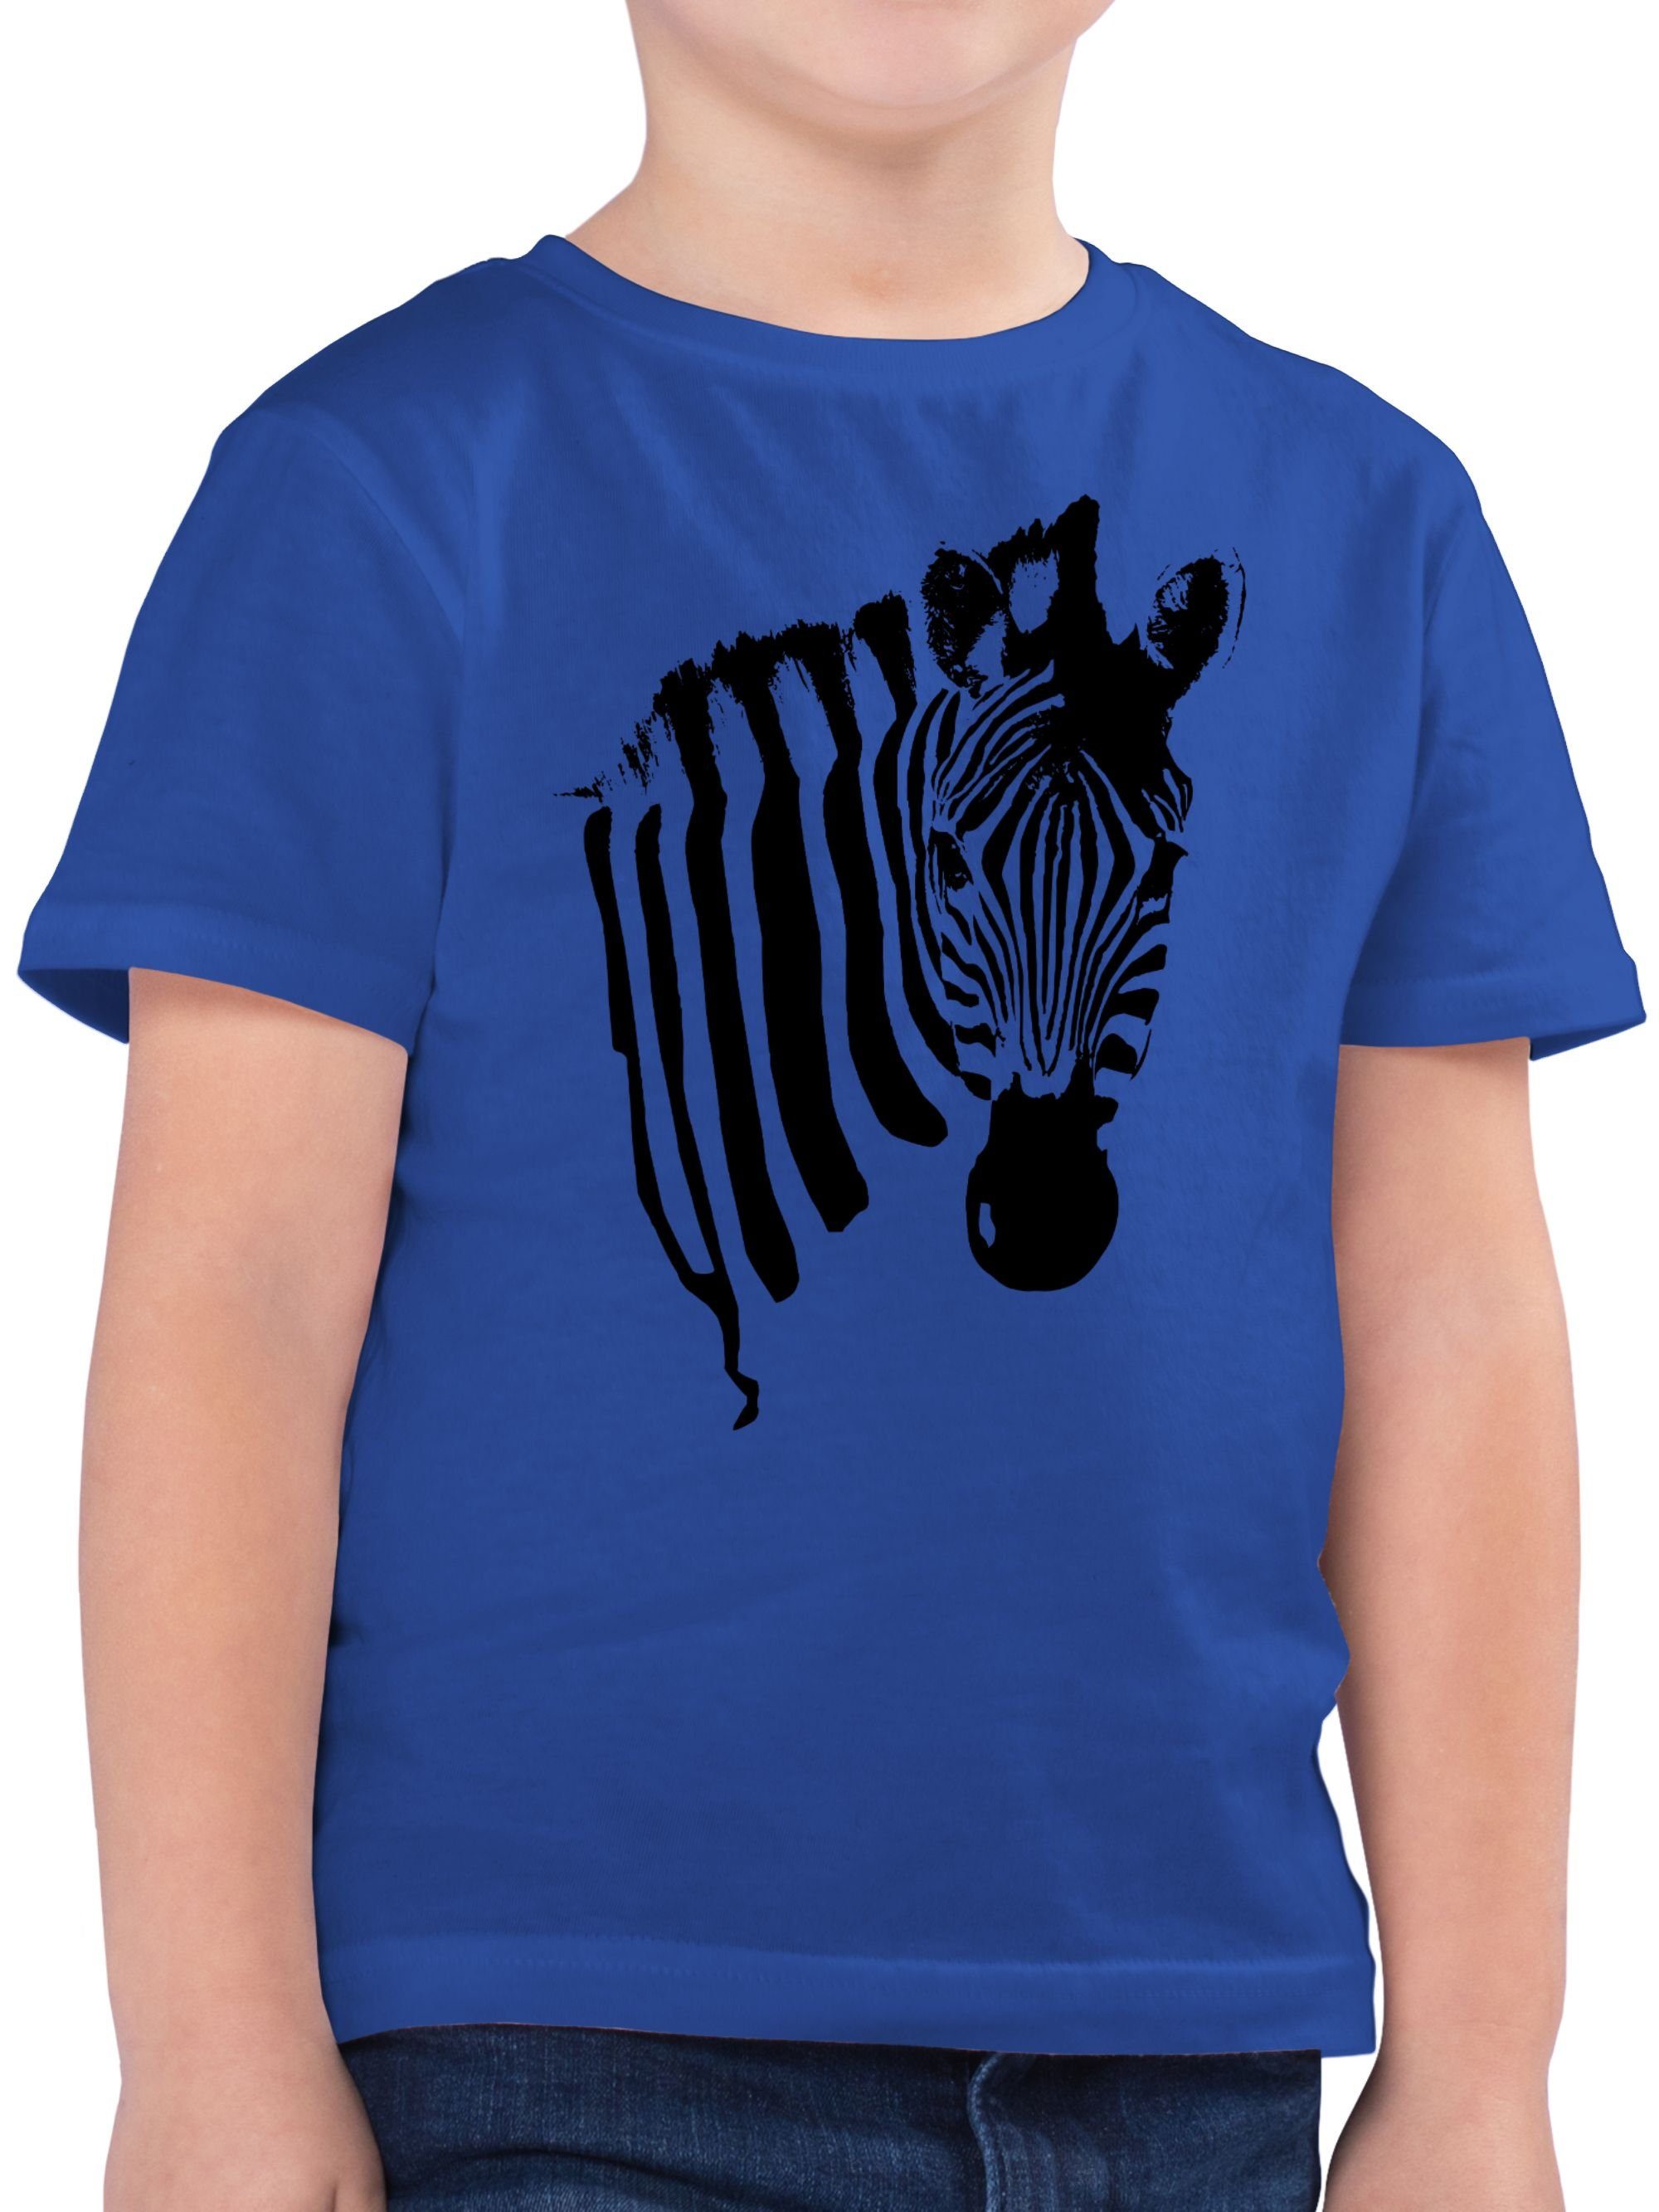 Zebramuster Safari - & 2 Afrika Tiermotiv T-Shirt Fasching Zebrastreifen Shirtracer Royalblau Zebra-Kostüm Zebra Karneval